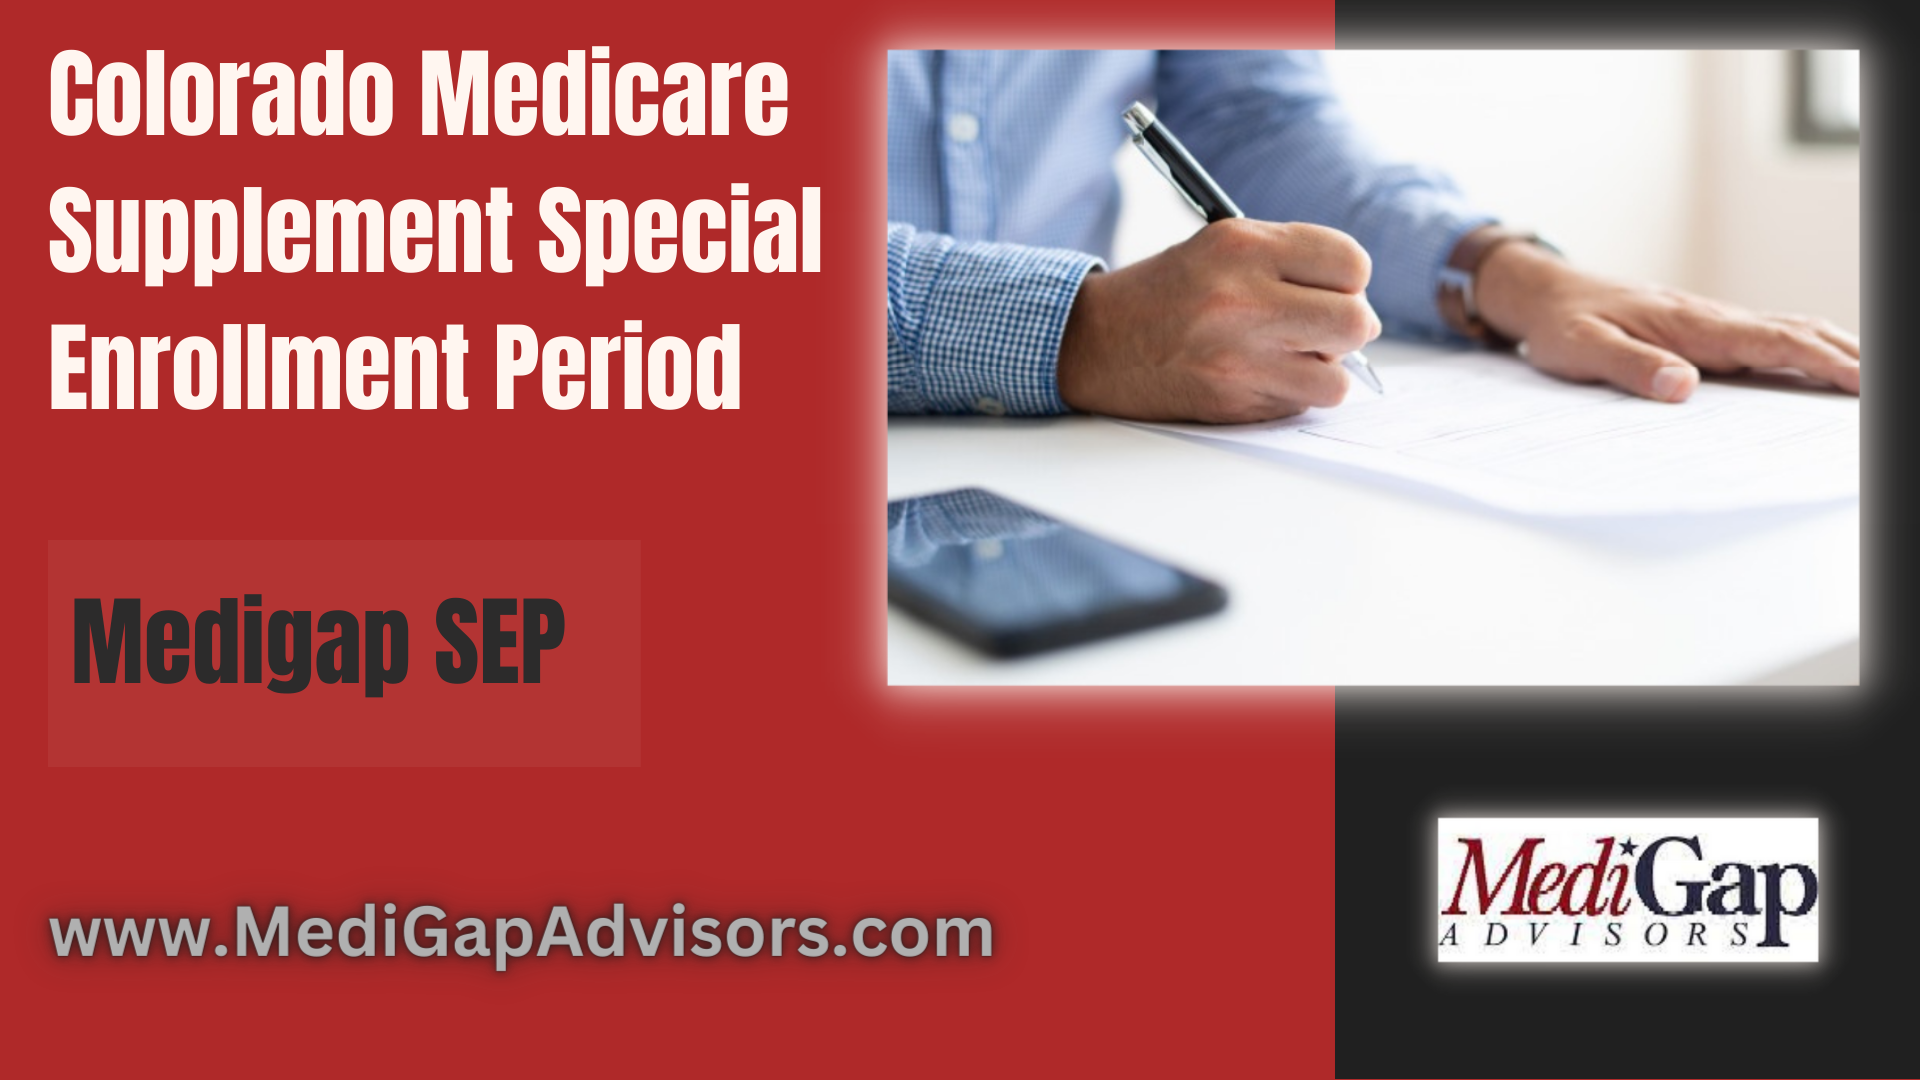 Colorado Medicare Supplement Special Enrollment Period [Medigap SEP]